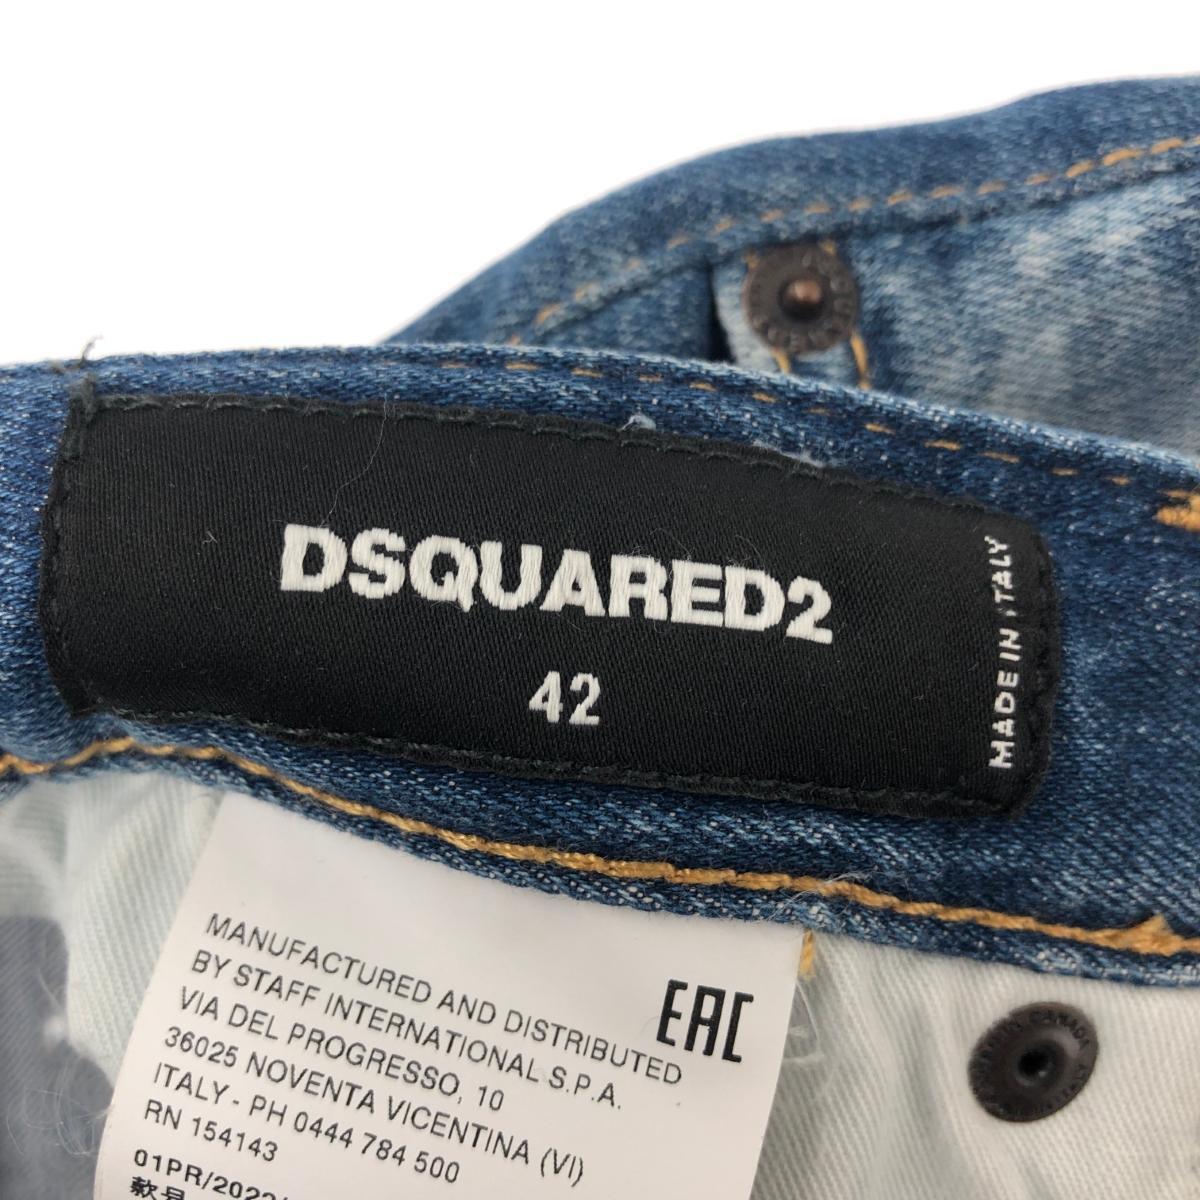  хороший *Dsquared2 Dsquared ske-ta- Denim брюки 42*b люмен z22 год повреждение обработка Zip дизайн graph .ti